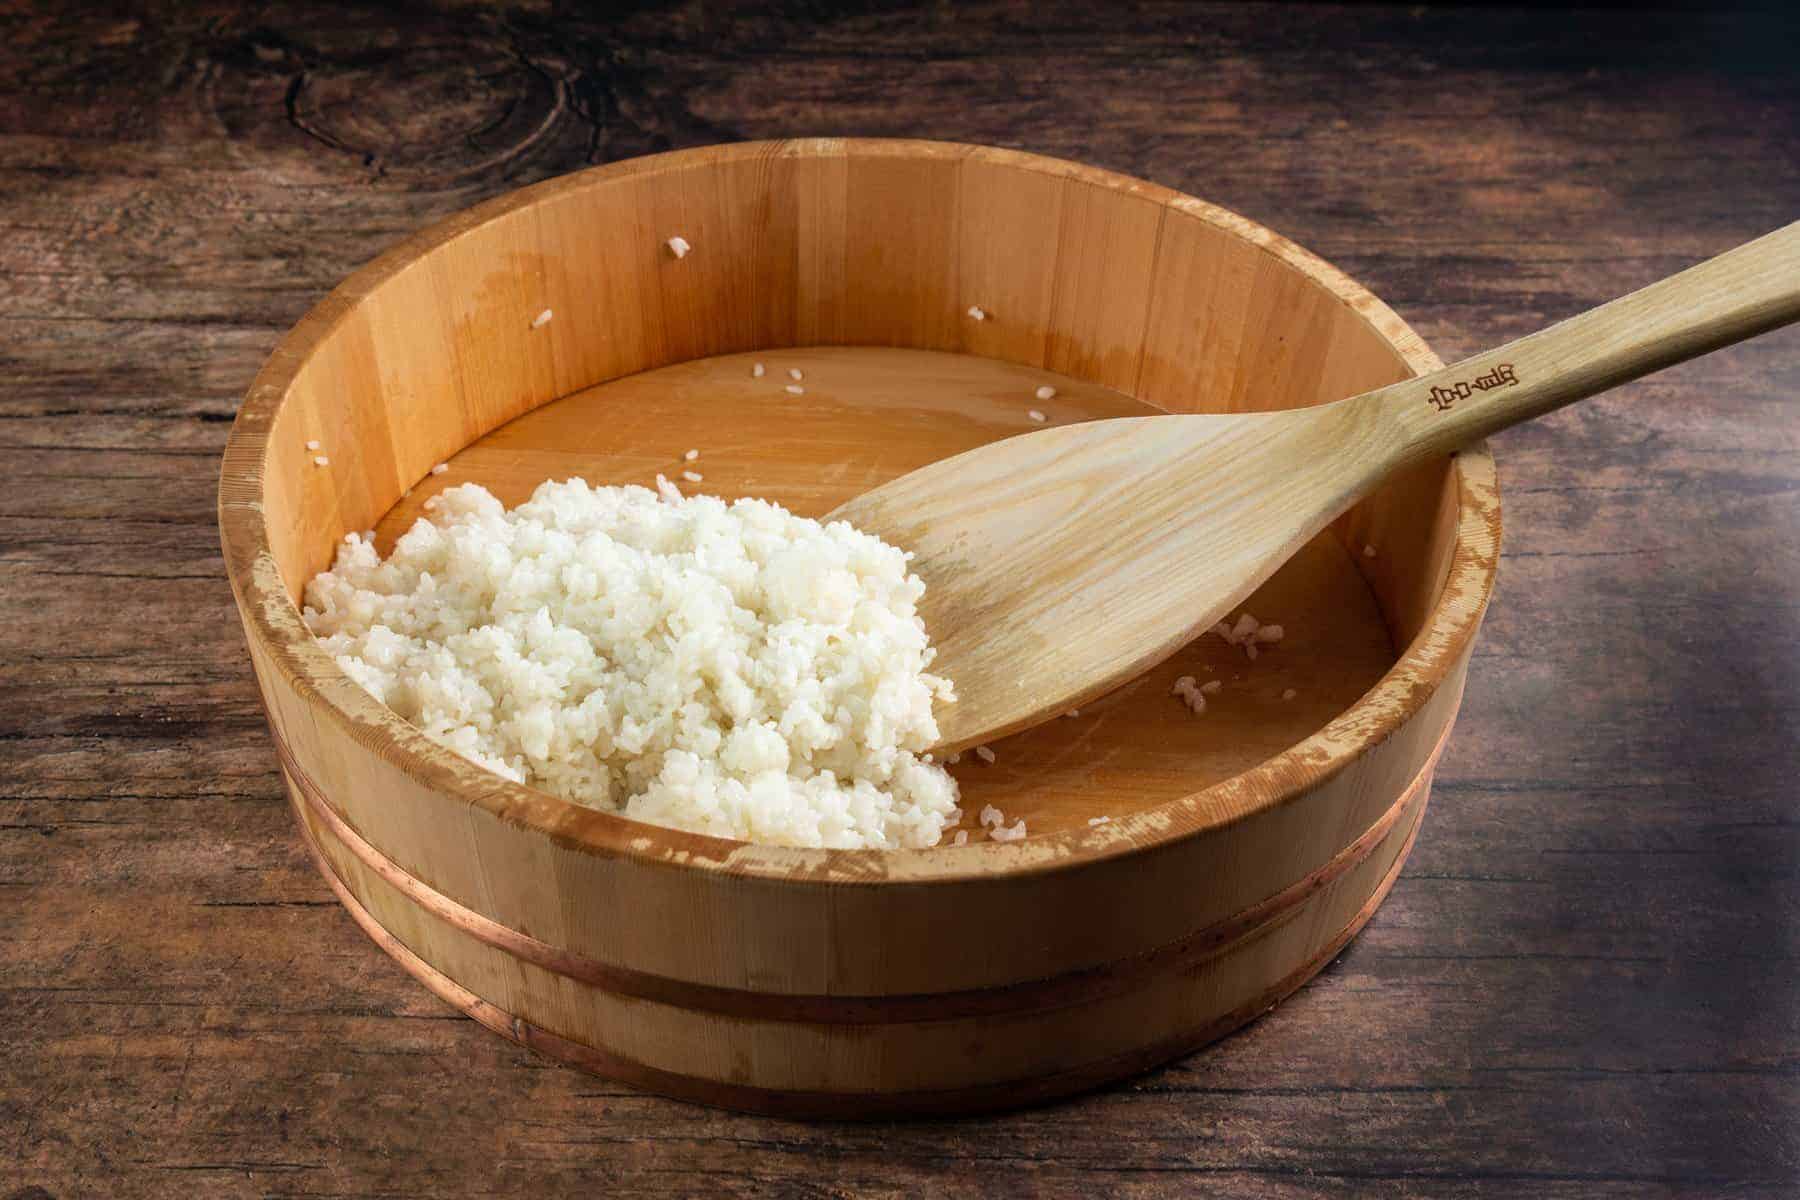 https://www.pressurecookrecipes.com/wp-content/uploads/2020/10/instant-pot-sushi-rice.jpg